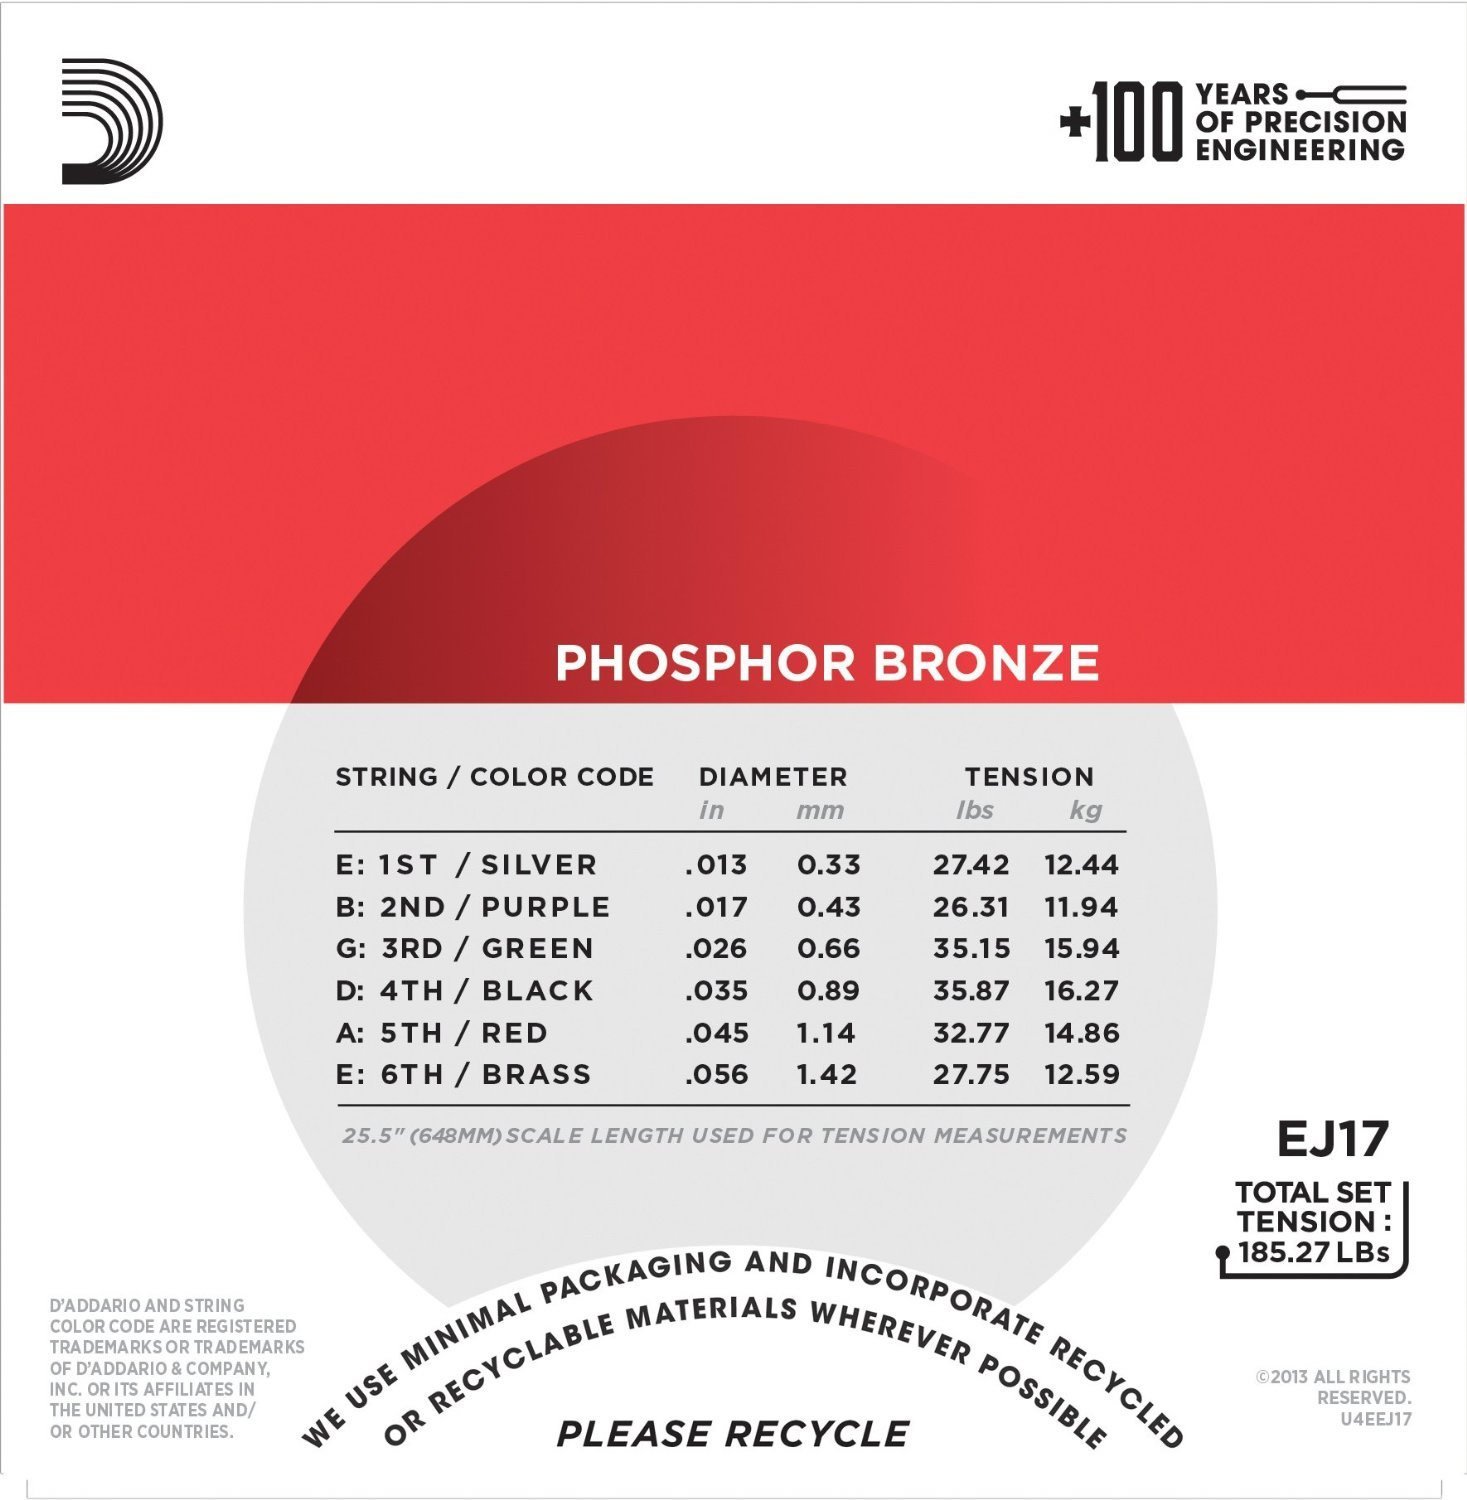 D Addario EJ17 Phosphor Bronze, Medium, 13-56